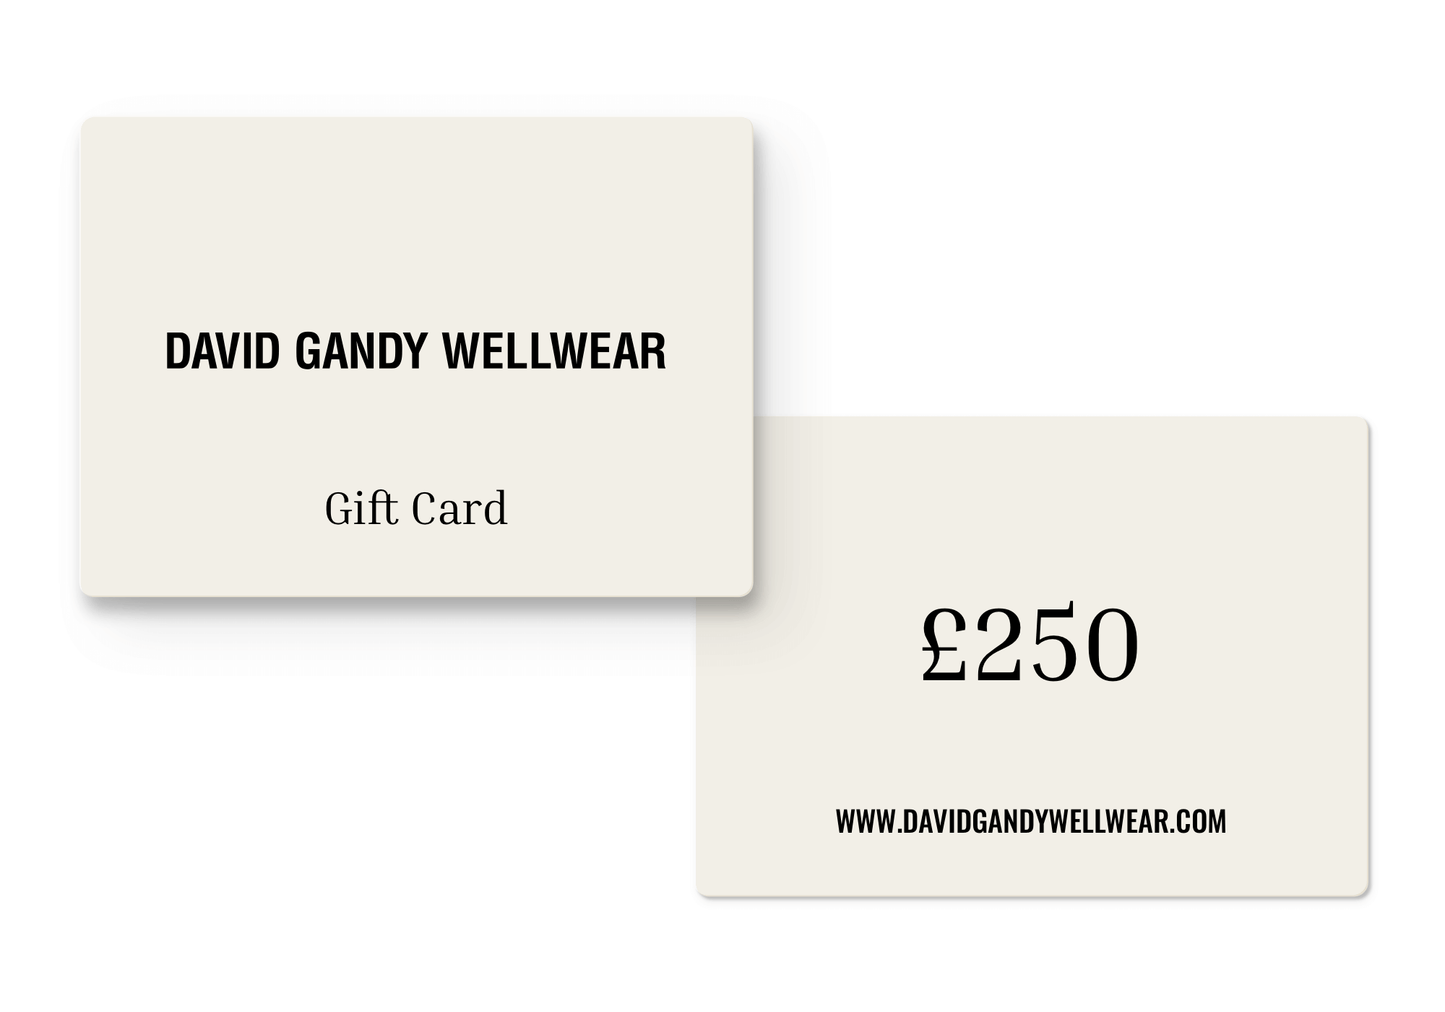 Wellwear Gift Card